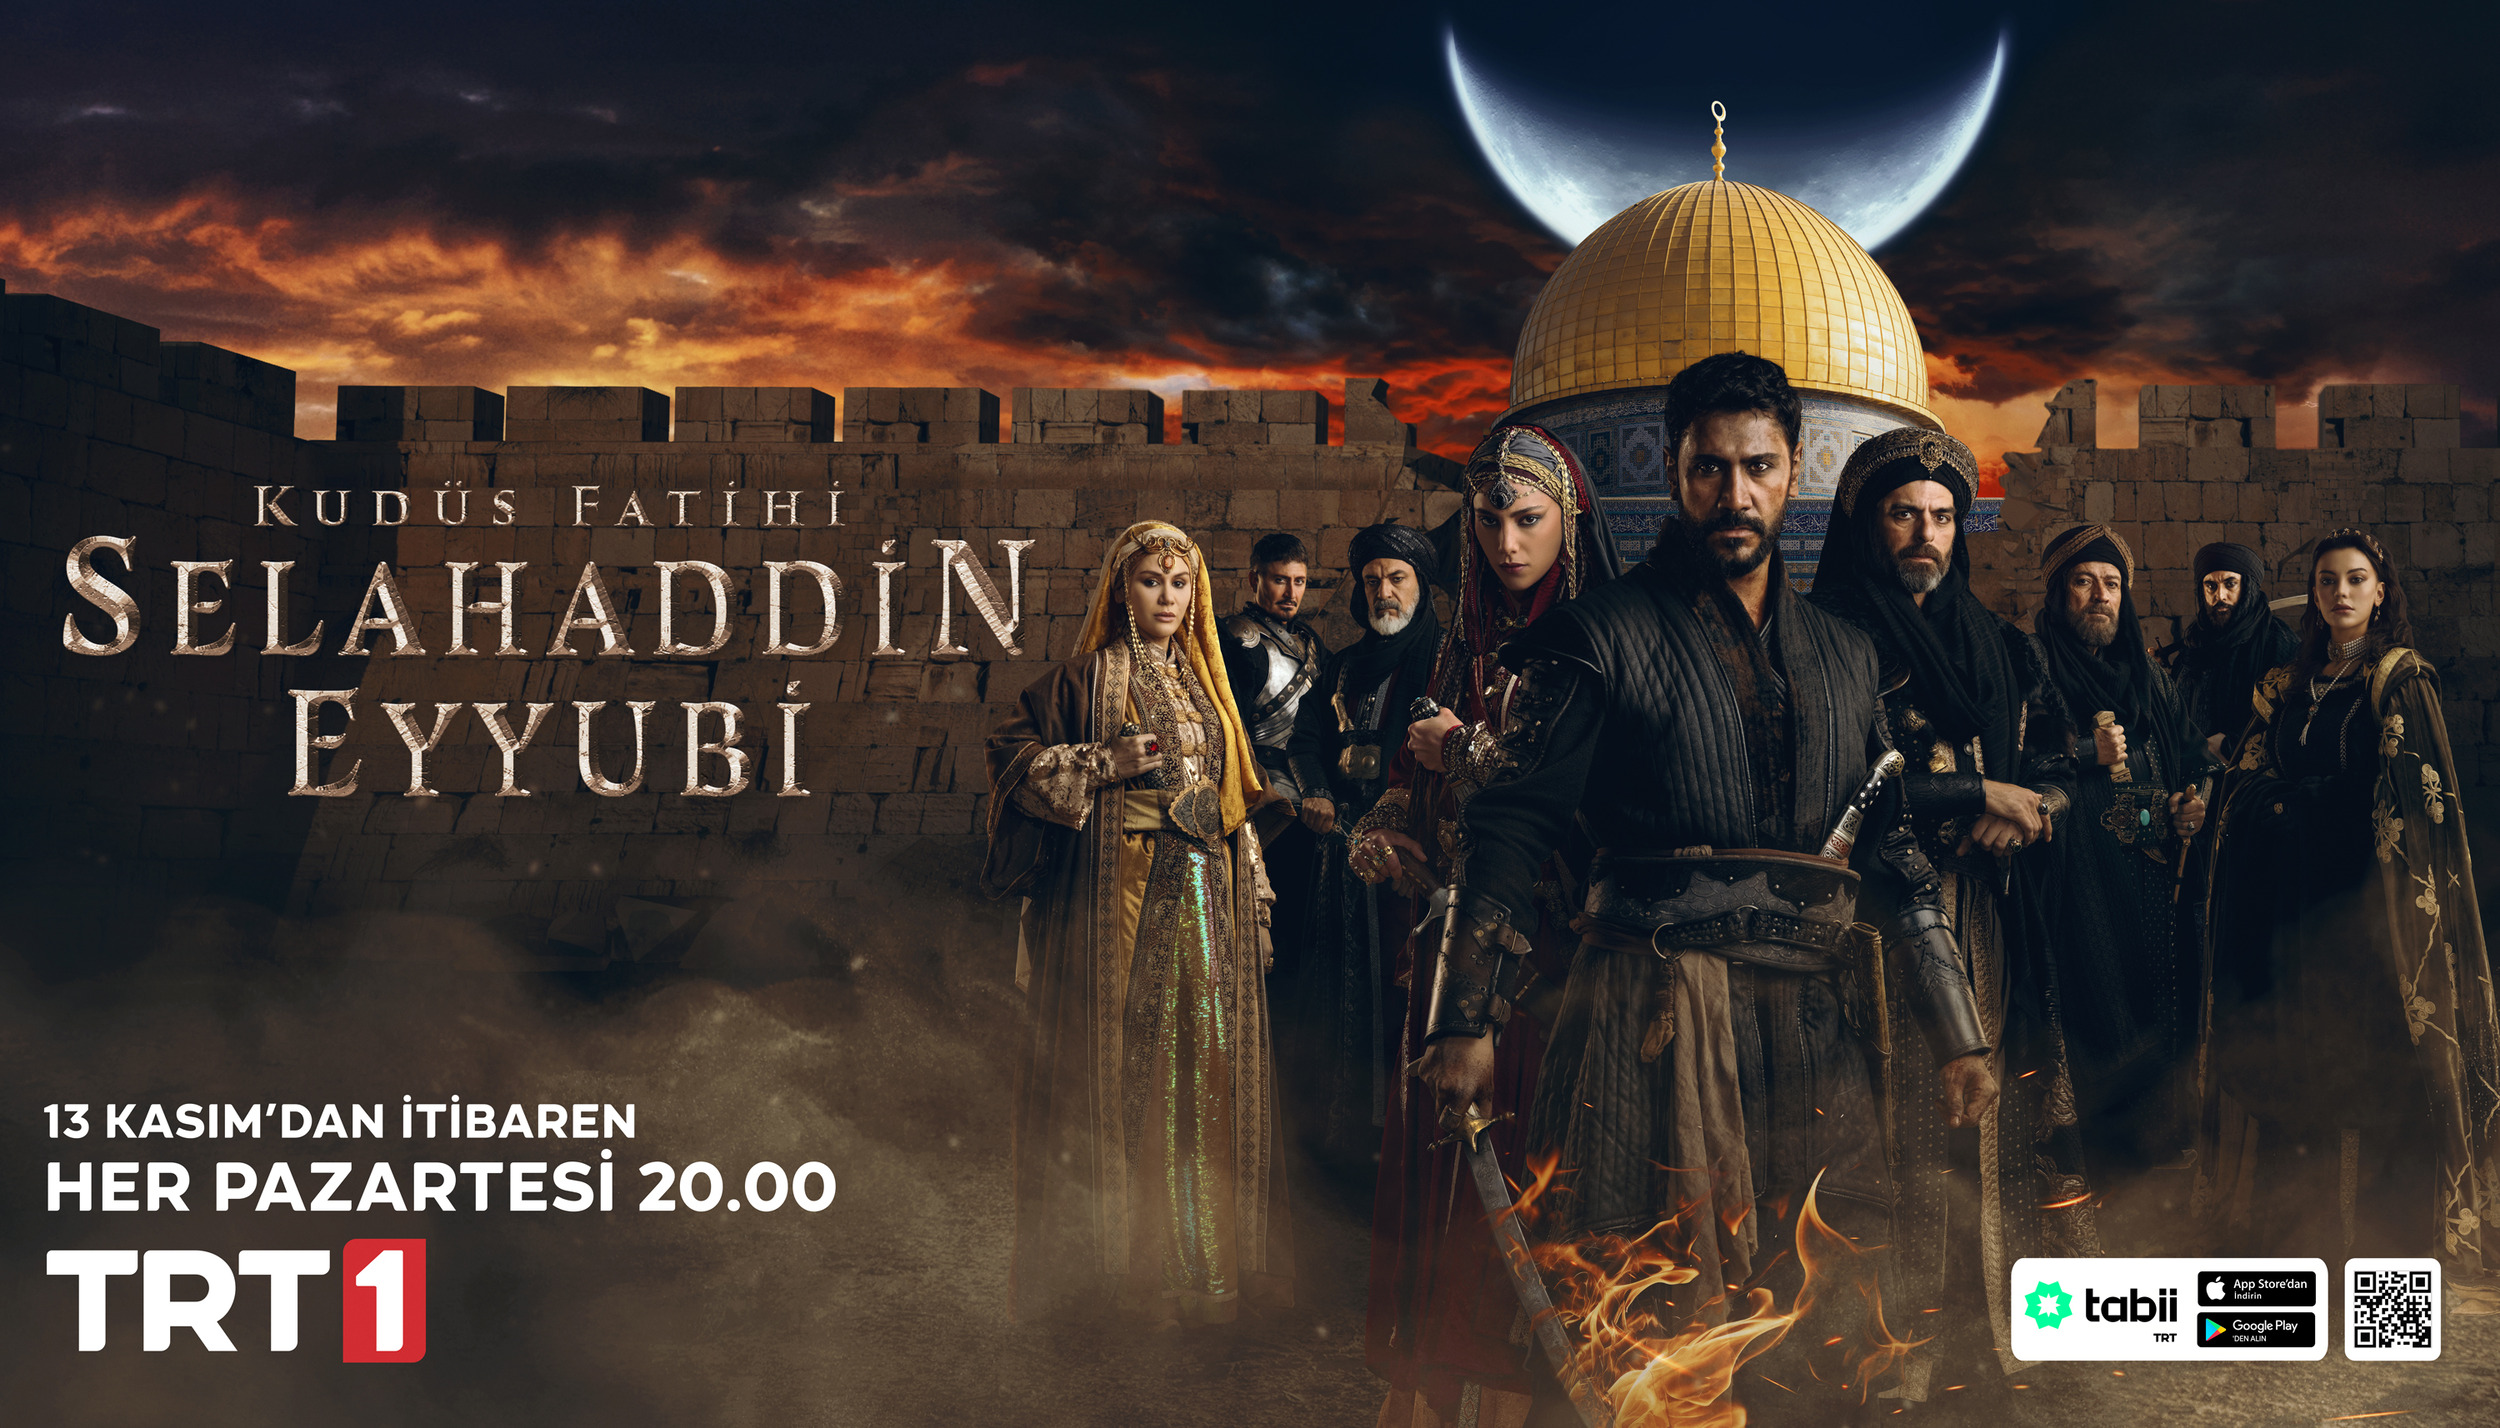 Mega Sized TV Poster Image for Kudüs Fatihi: Selahaddin Eyyubi (#2 of 4)